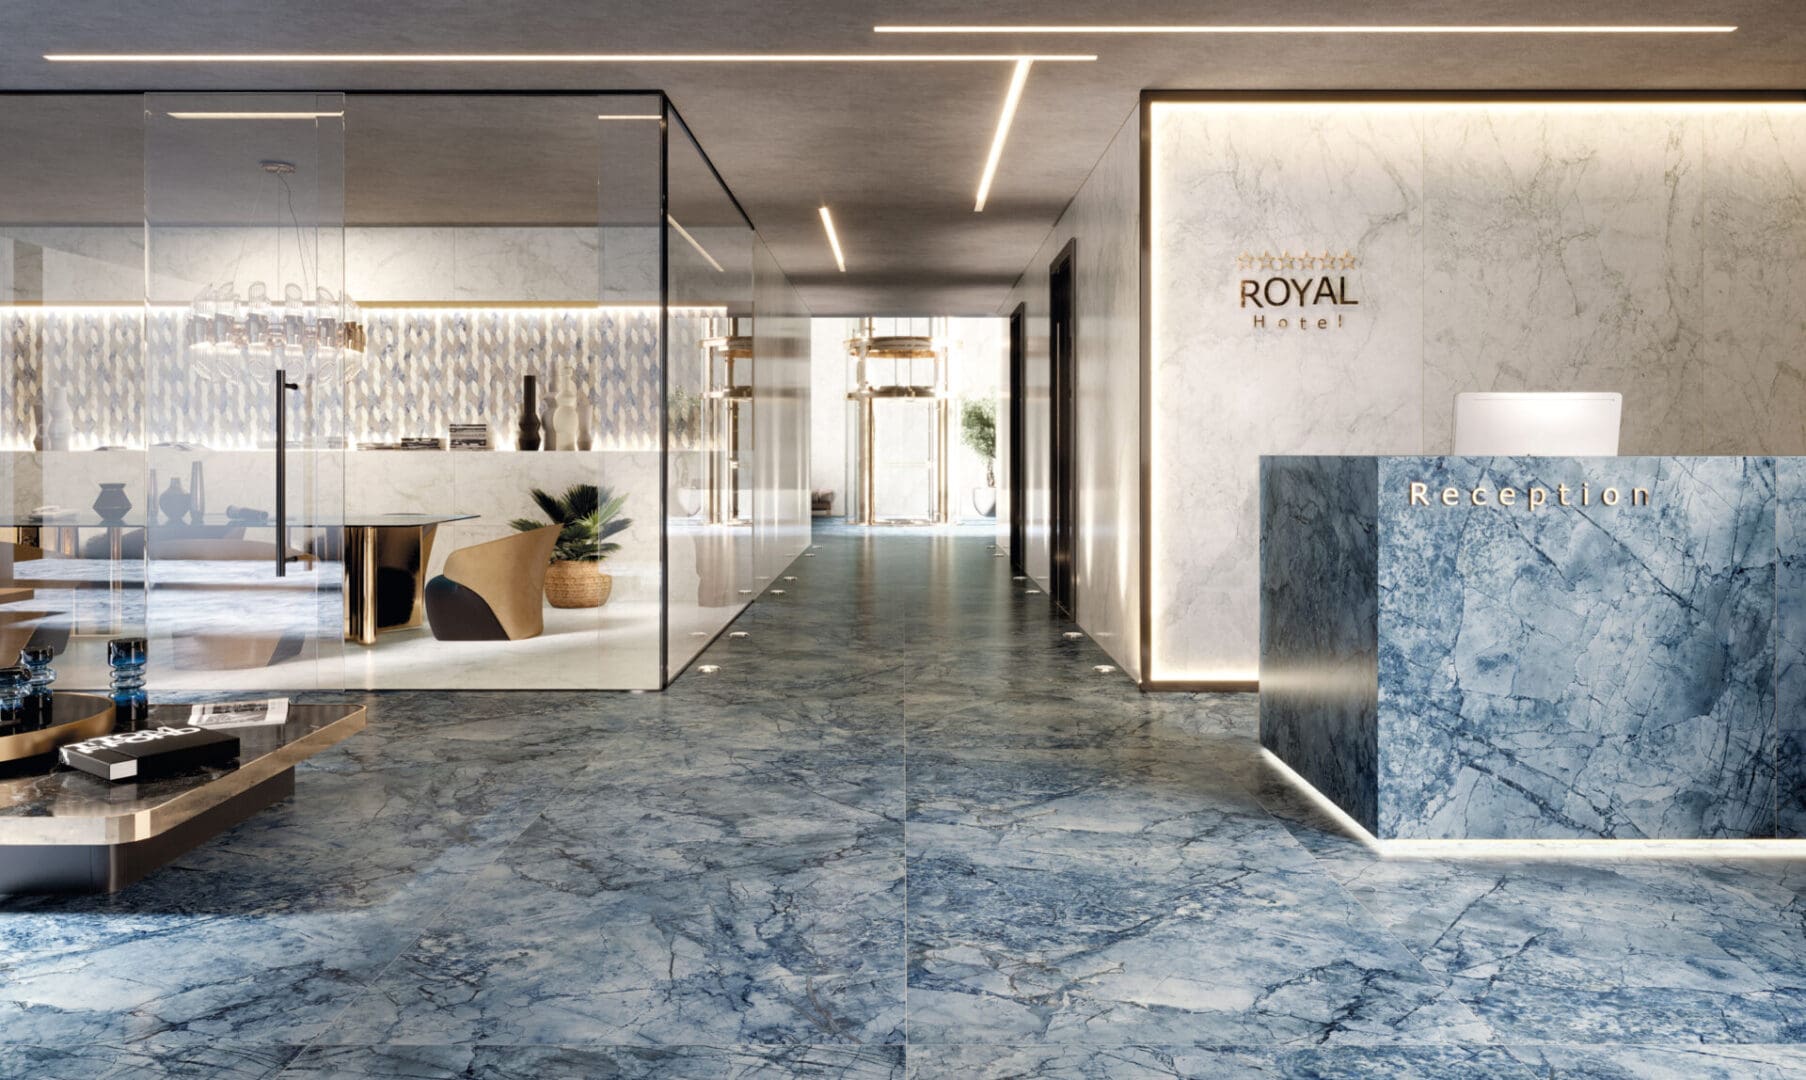 a lobby area with marble flooring